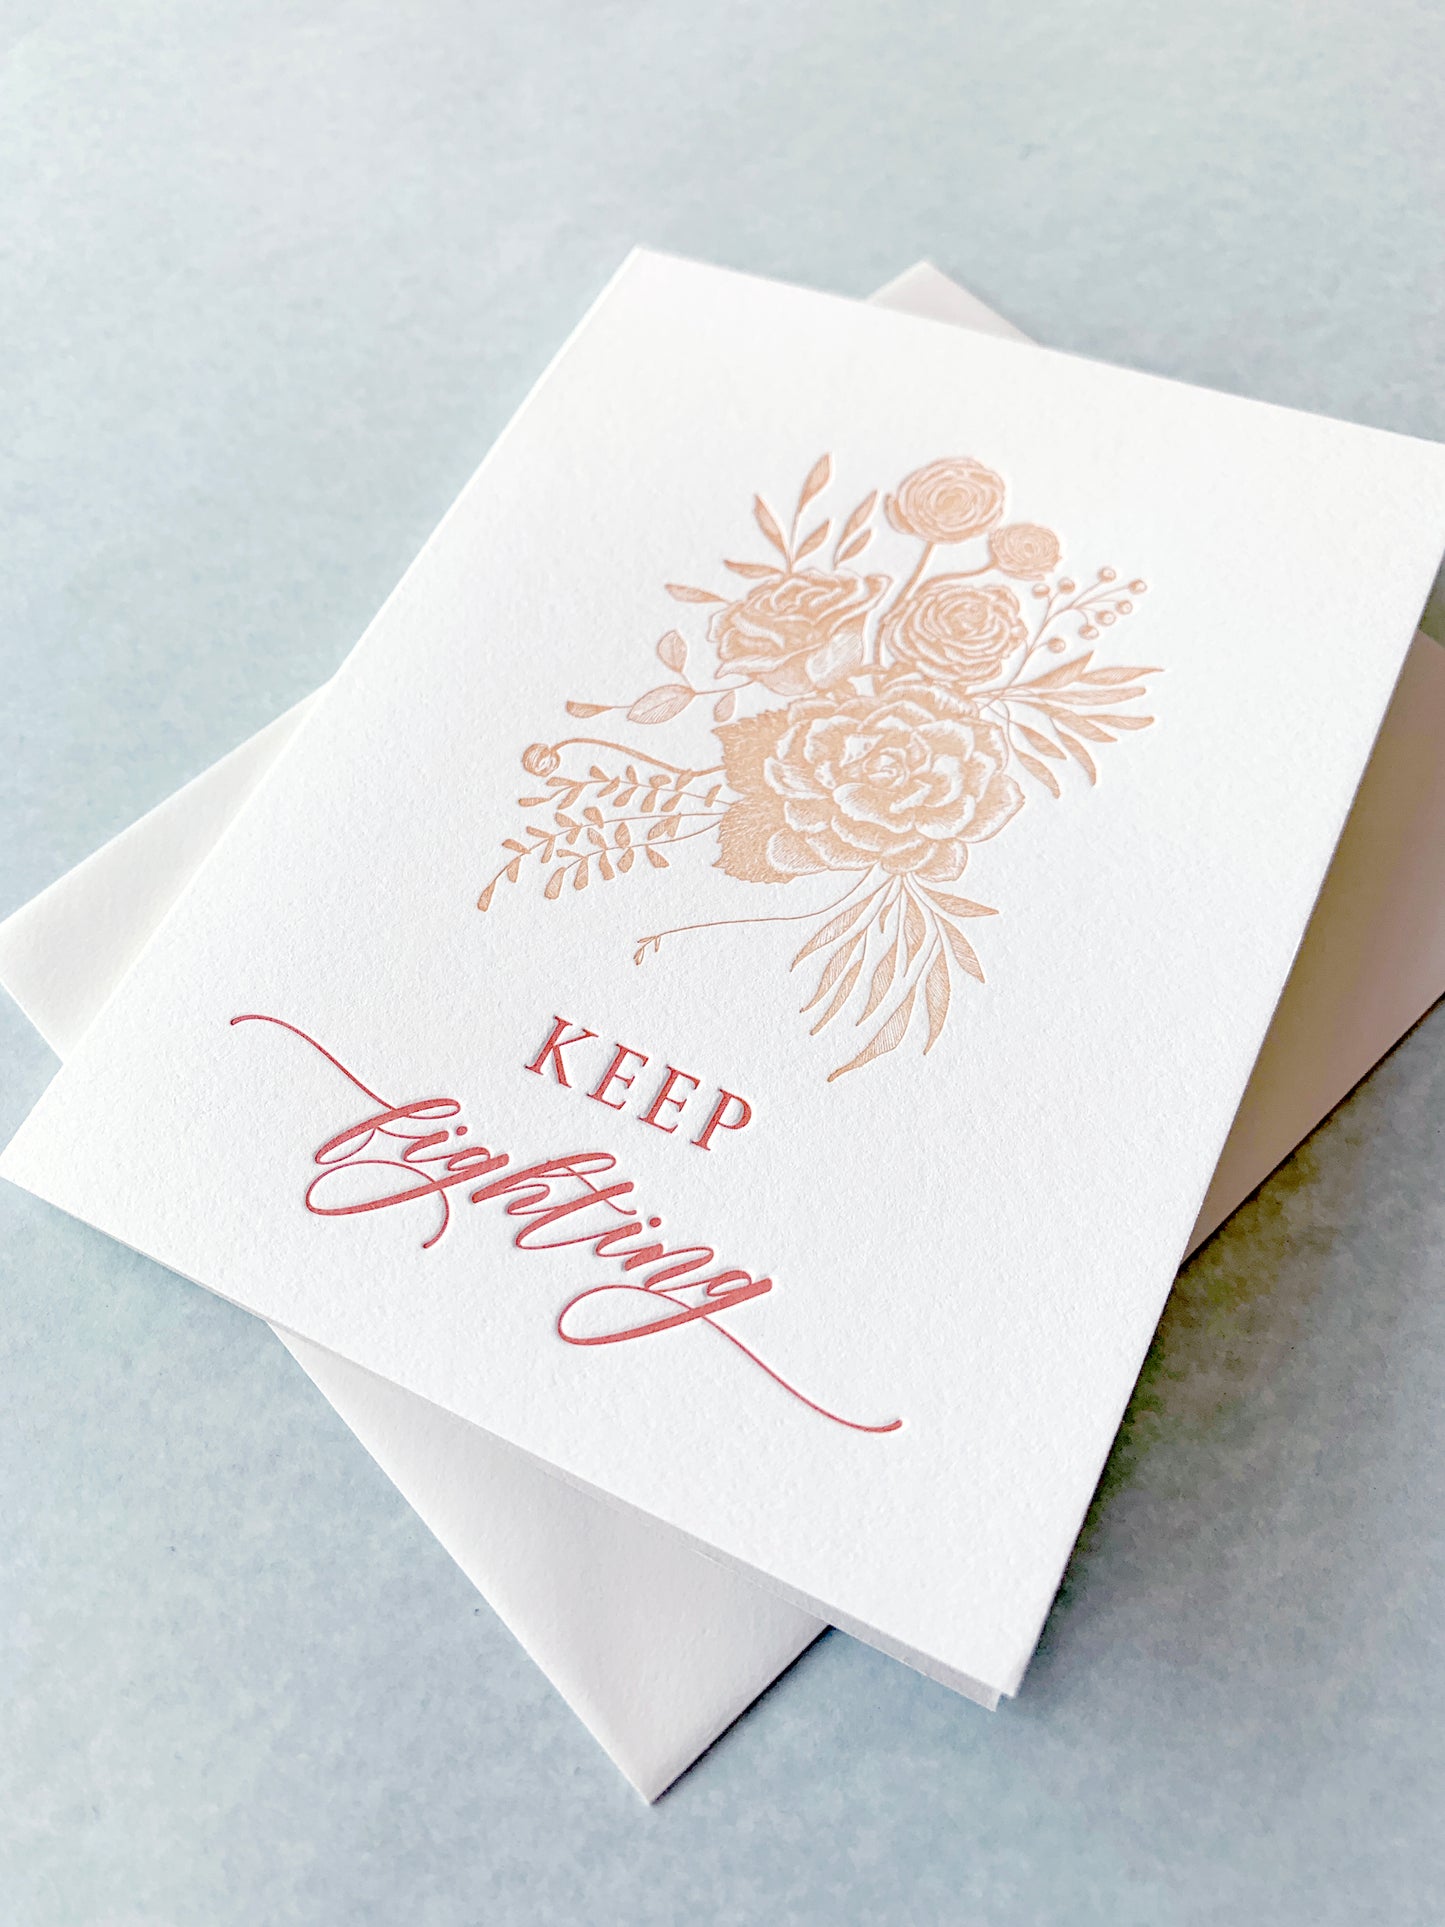 Keep Fighting Letterpress Greeting Card